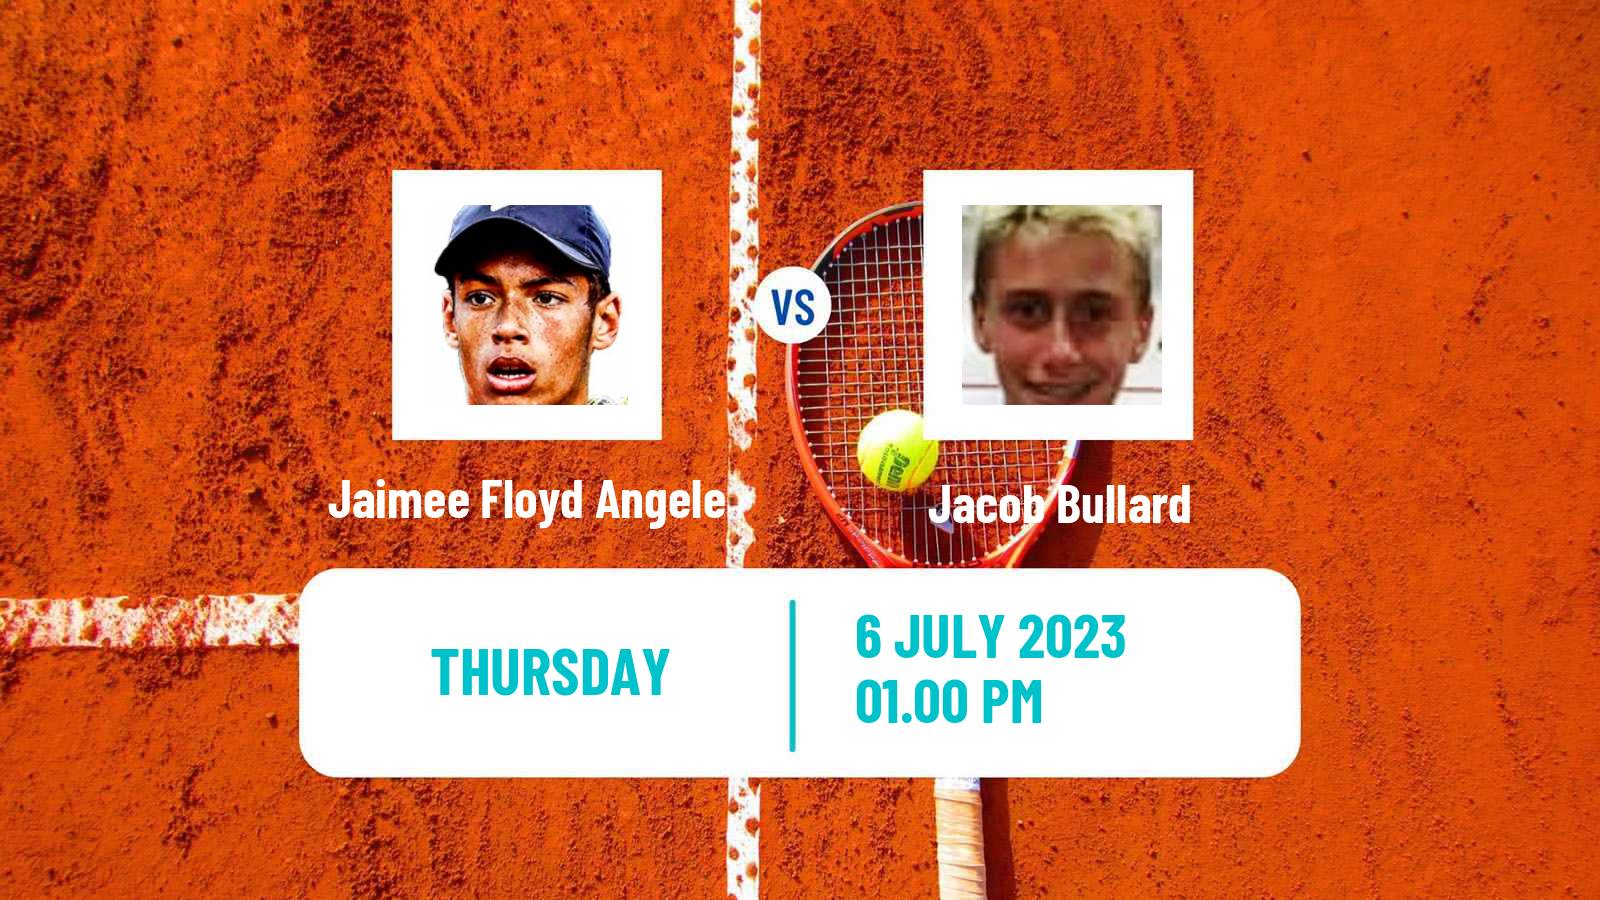 Tennis ITF M15 Lakewood Ca Men Jaimee Floyd Angele - Jacob Bullard